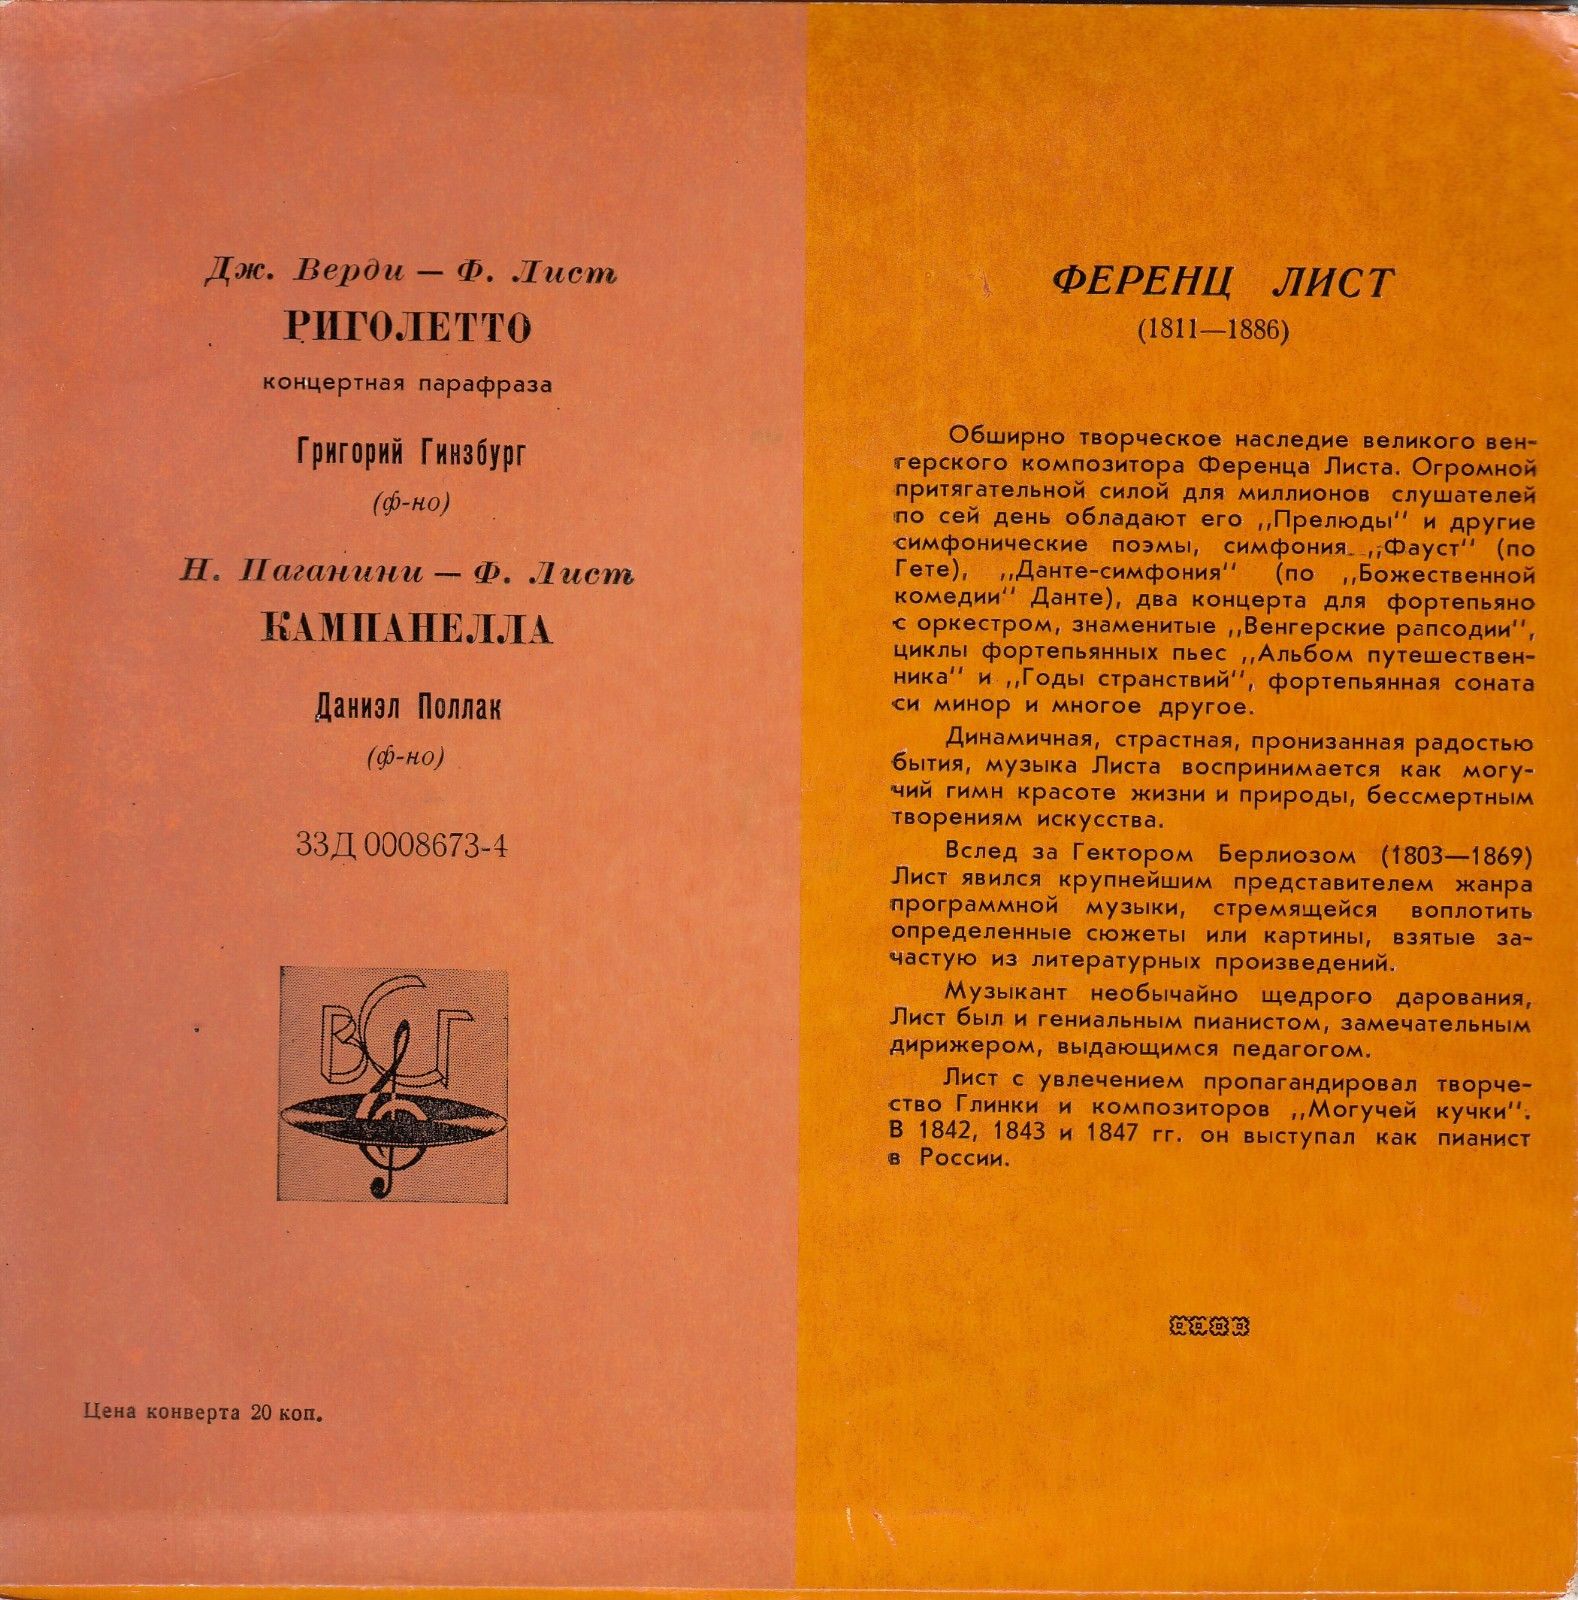 Ф. Лист: Концертная парафраза на темы оперы Верди "Риголетто"; Н. Паганини - Ф. Лист: "Кампанелла"